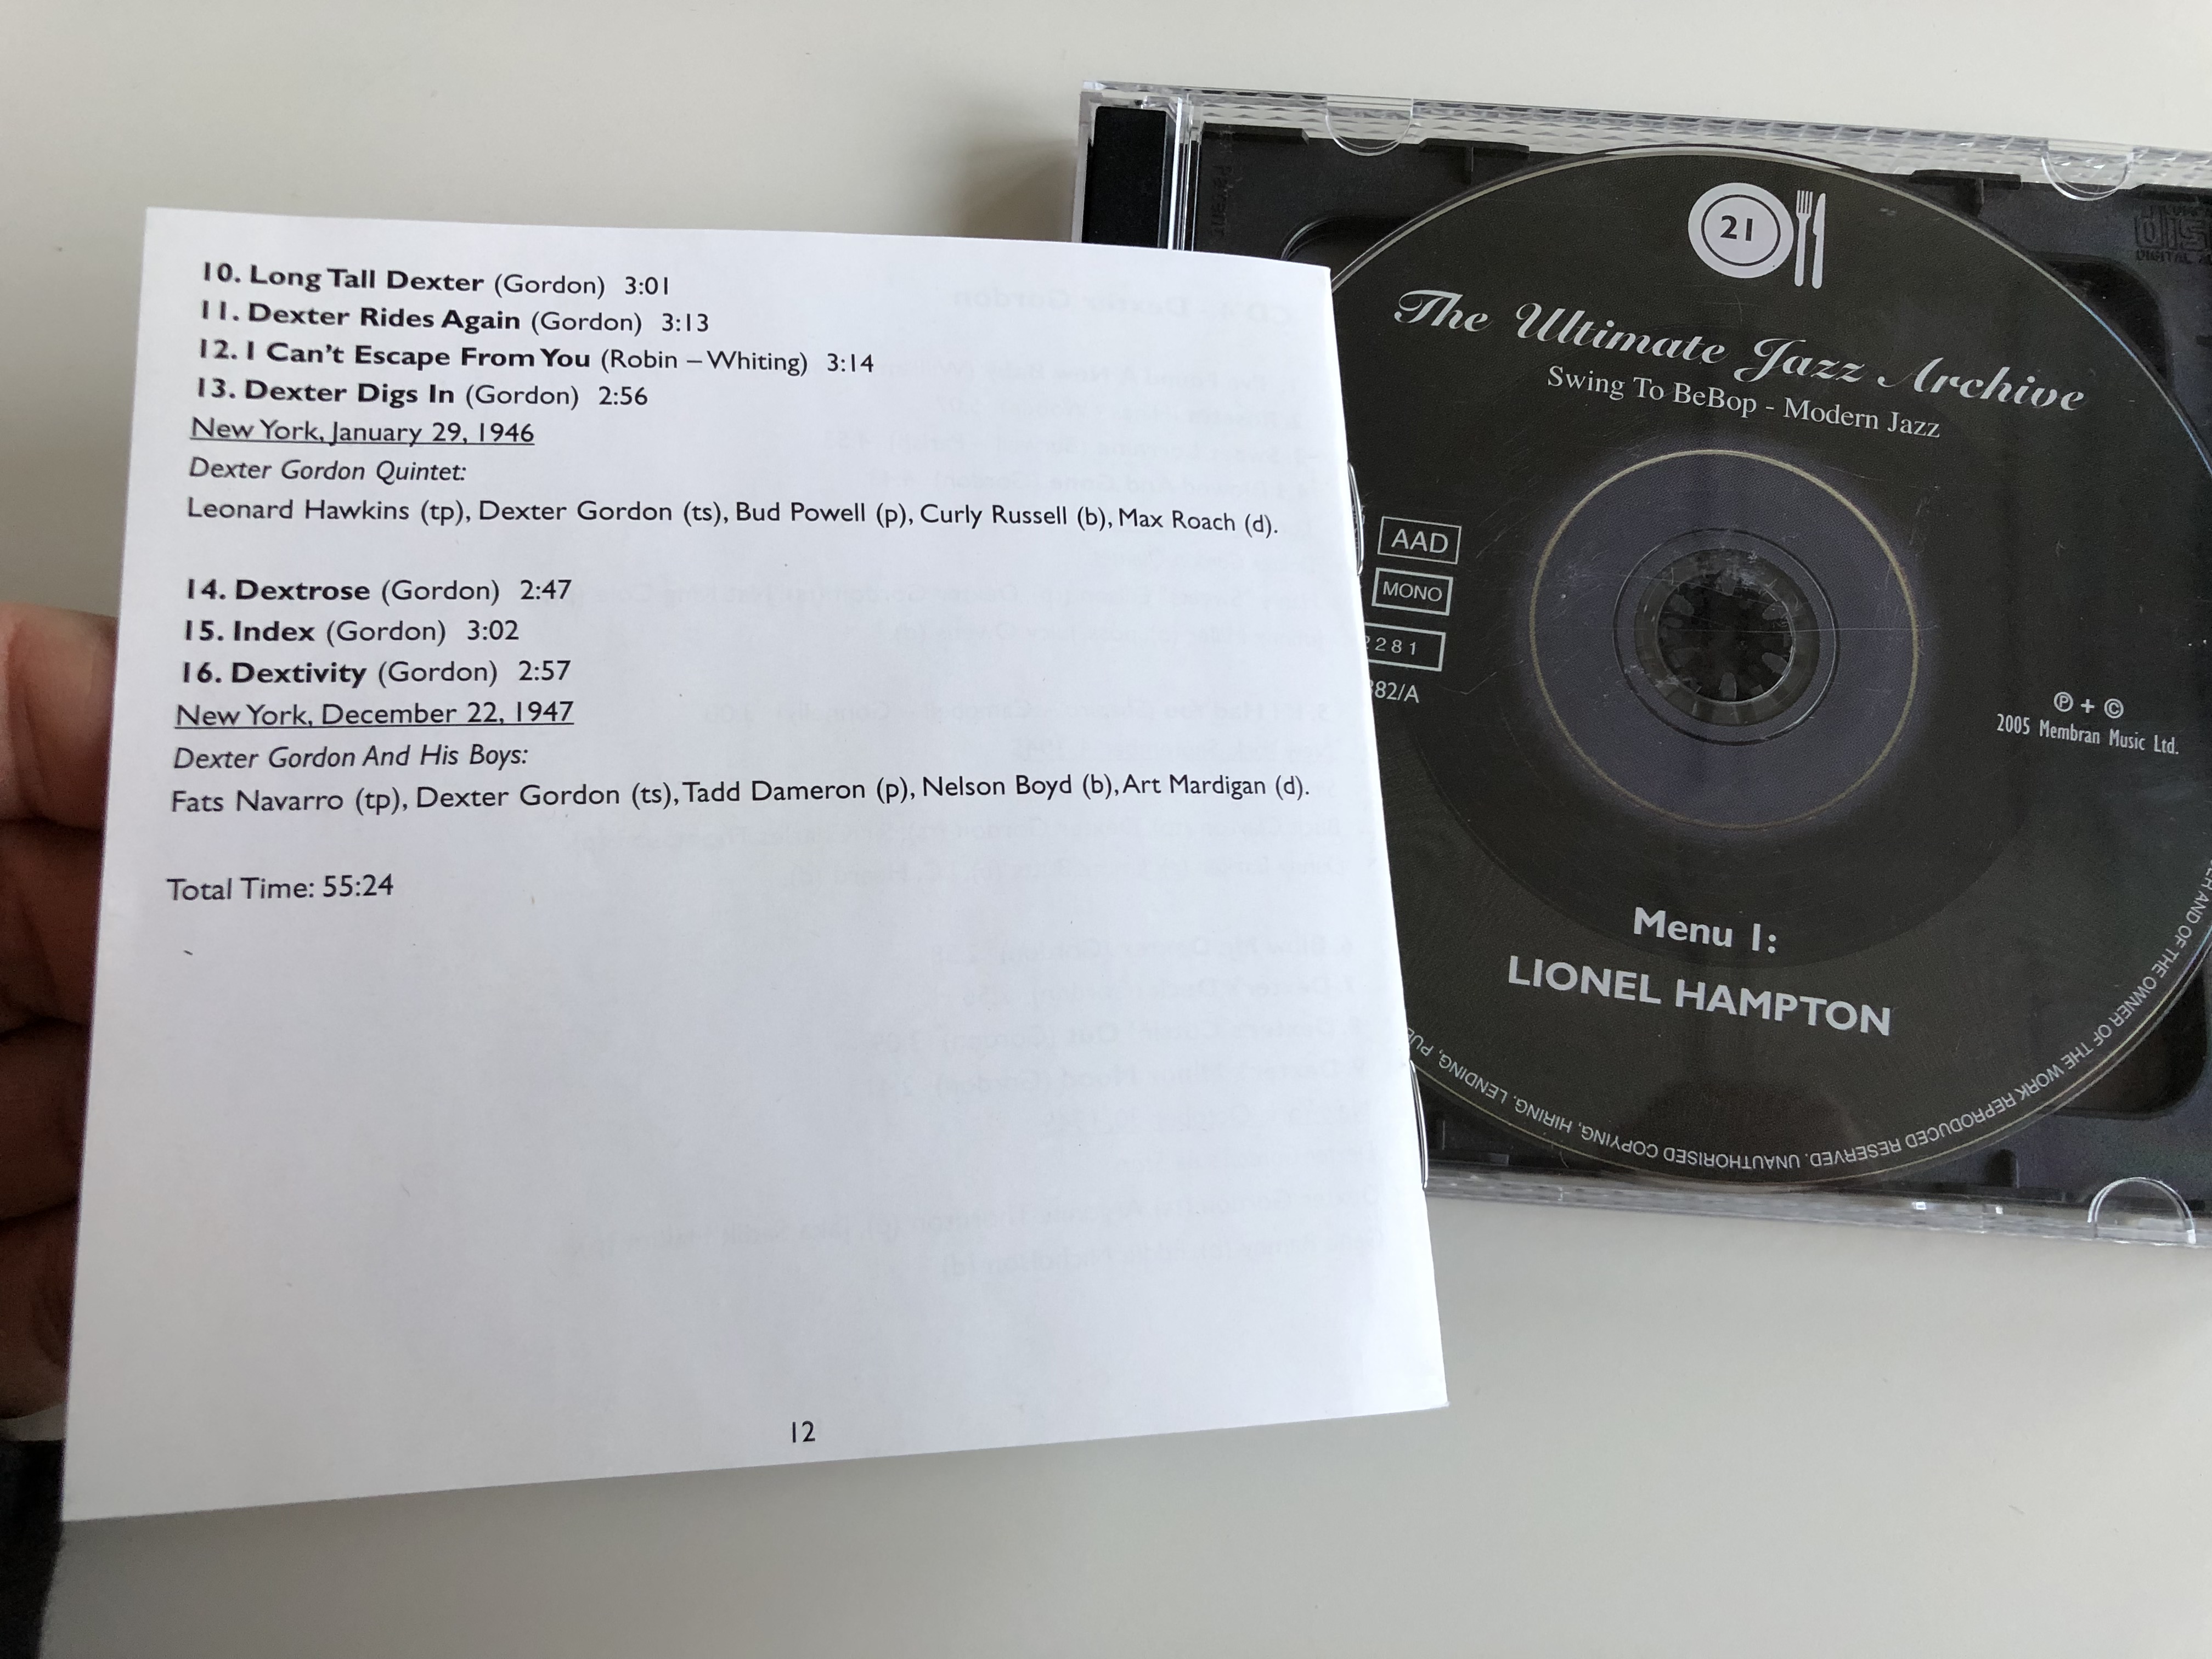 the-ultimate-jazz-archive-4-cd-set-swing-to-bebop-modern-jazz-lionel-hampton-charlie-shavers-charlie-christian-dexter-gordon-audio-cd-set-2005-membran-music-lc12281-7-.jpg